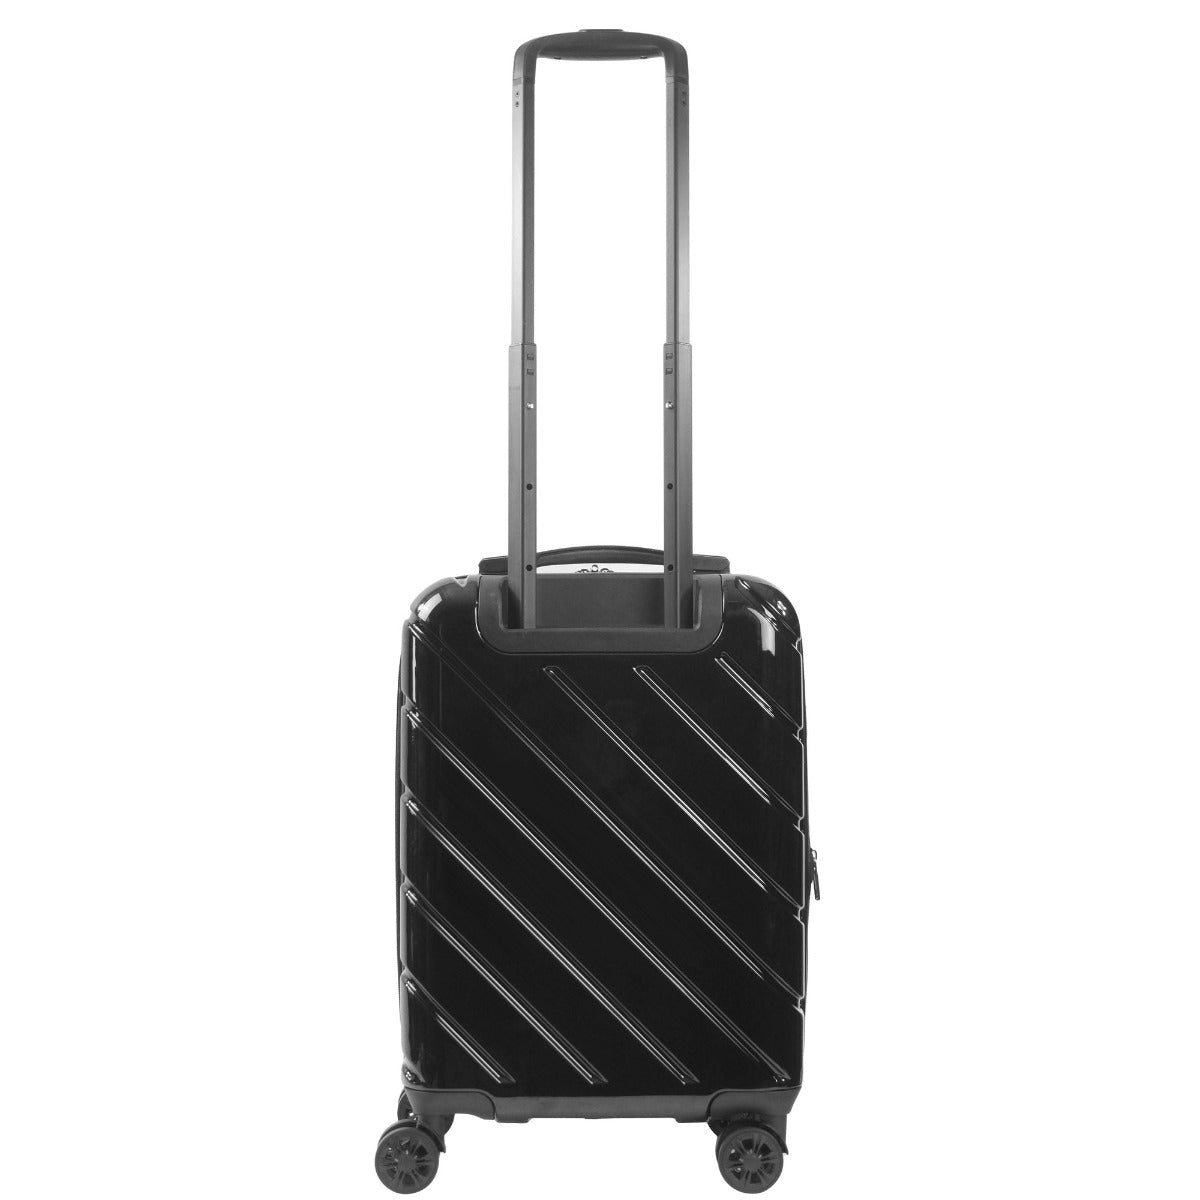 Ful Velocity 23" Hardside Spinner Suitcase Black Carry-on Luggage